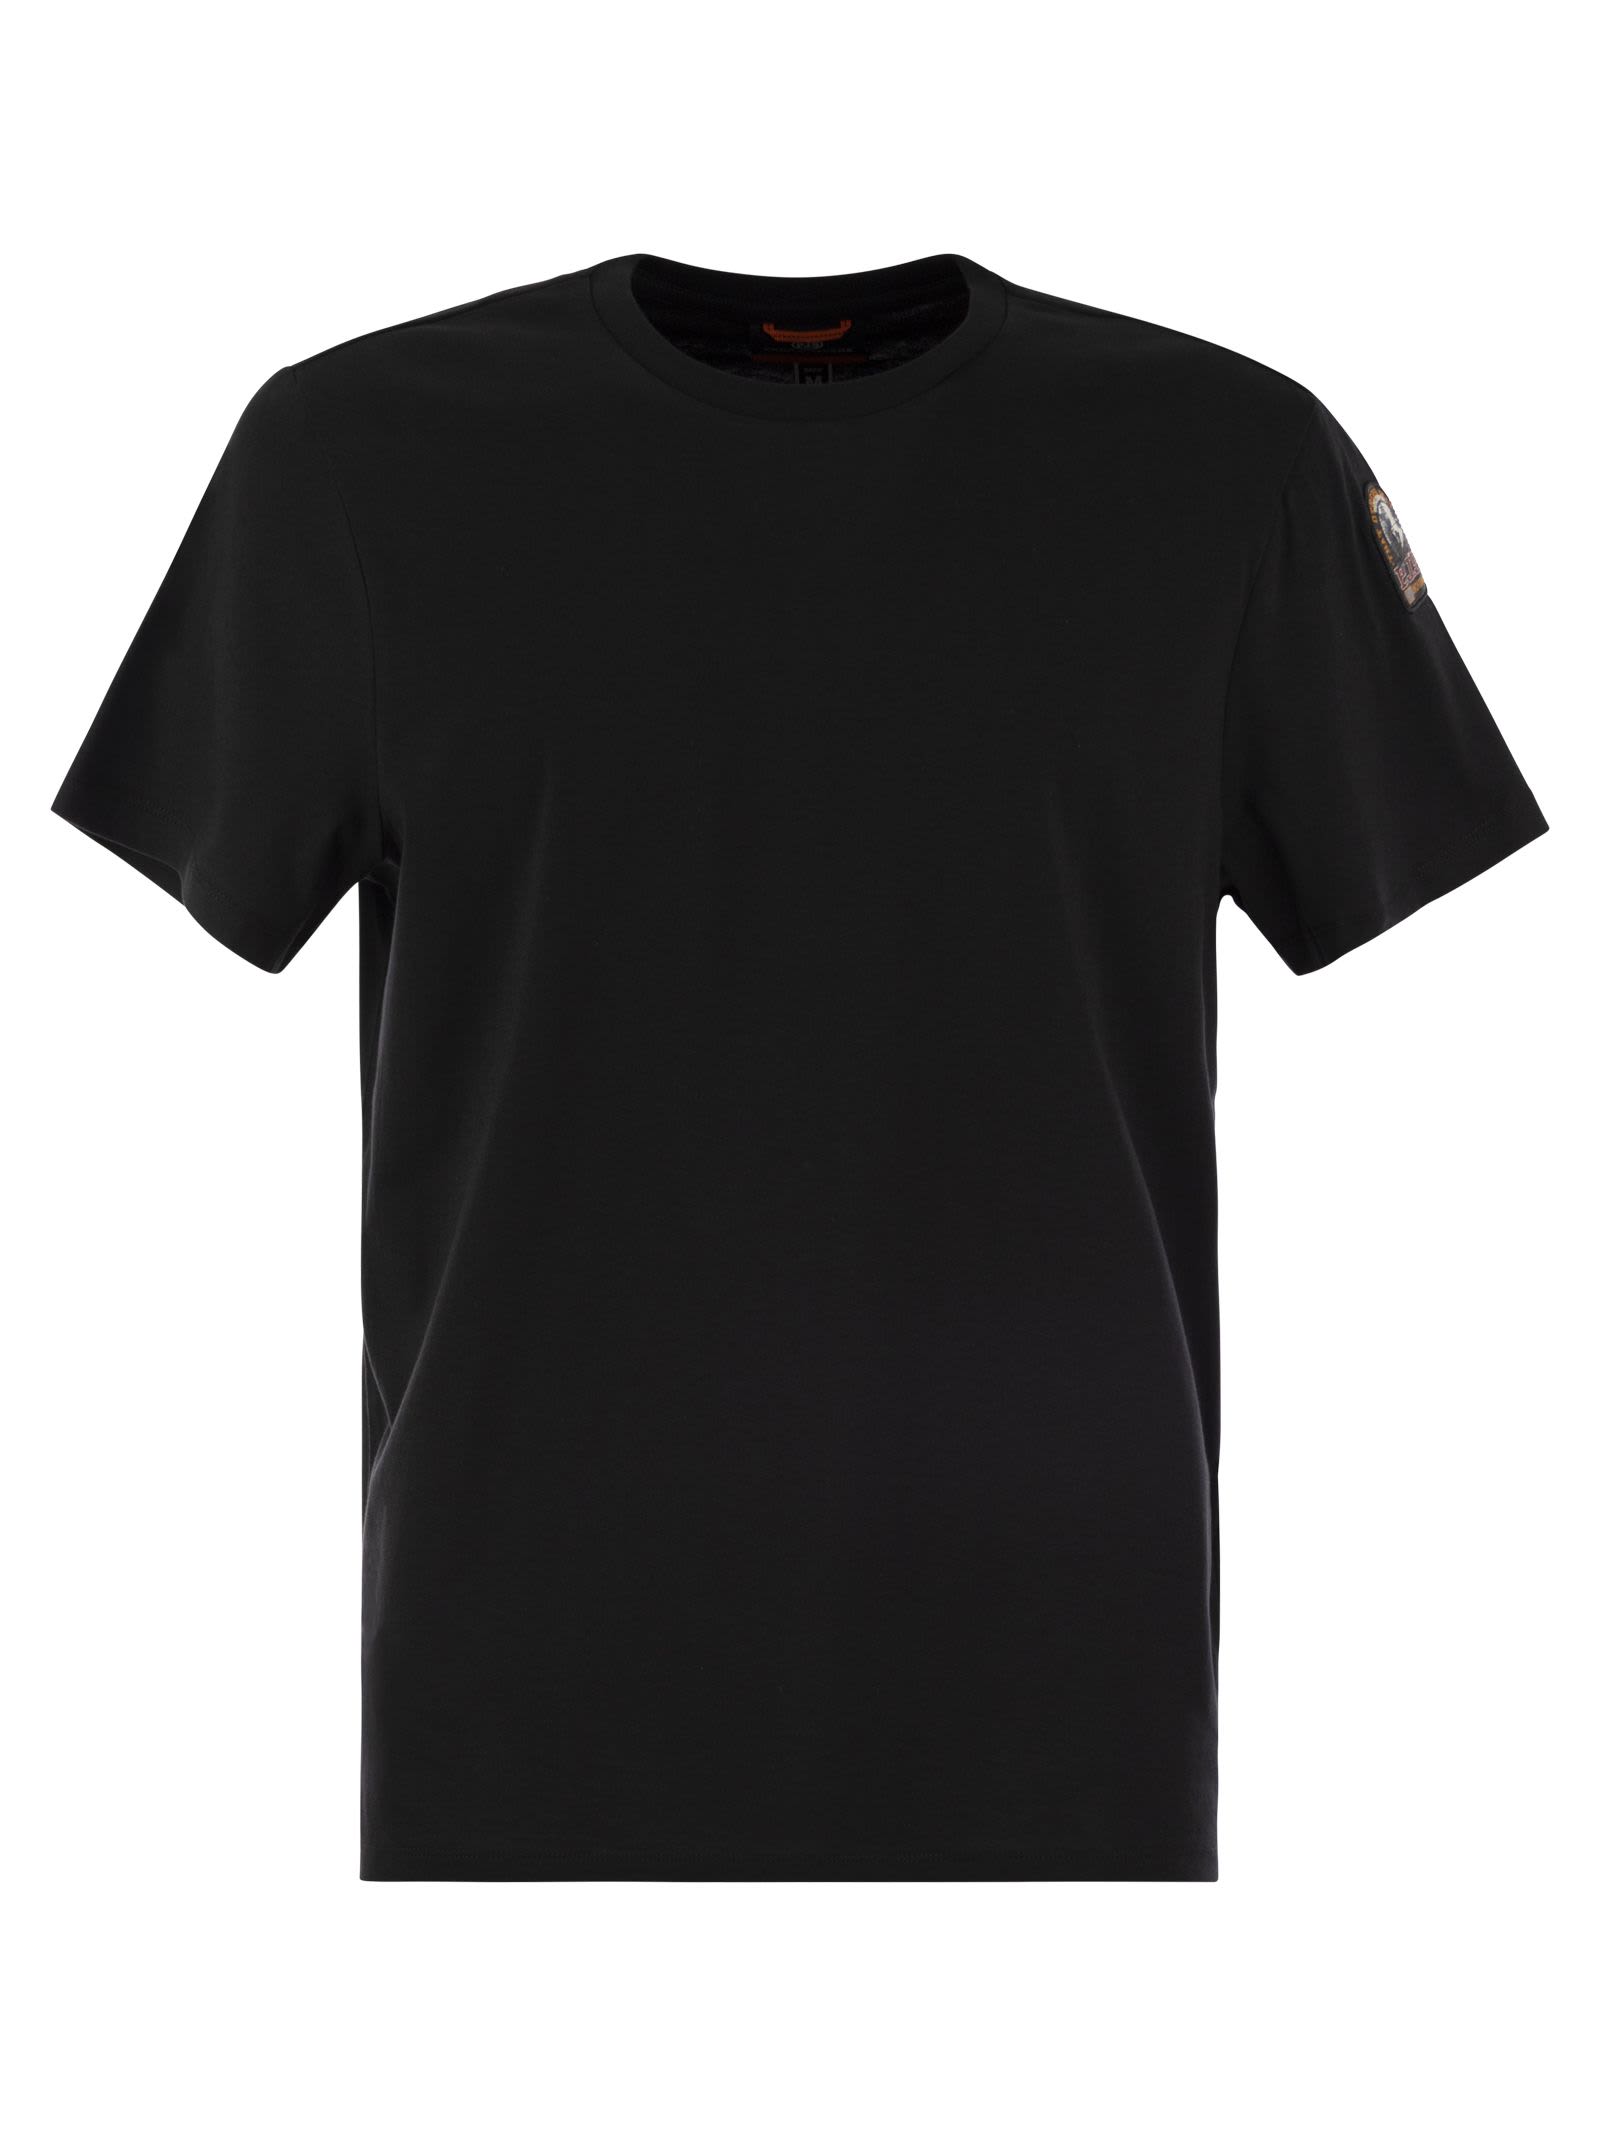 Shispare Tee - Cotton Jersey T-shirt